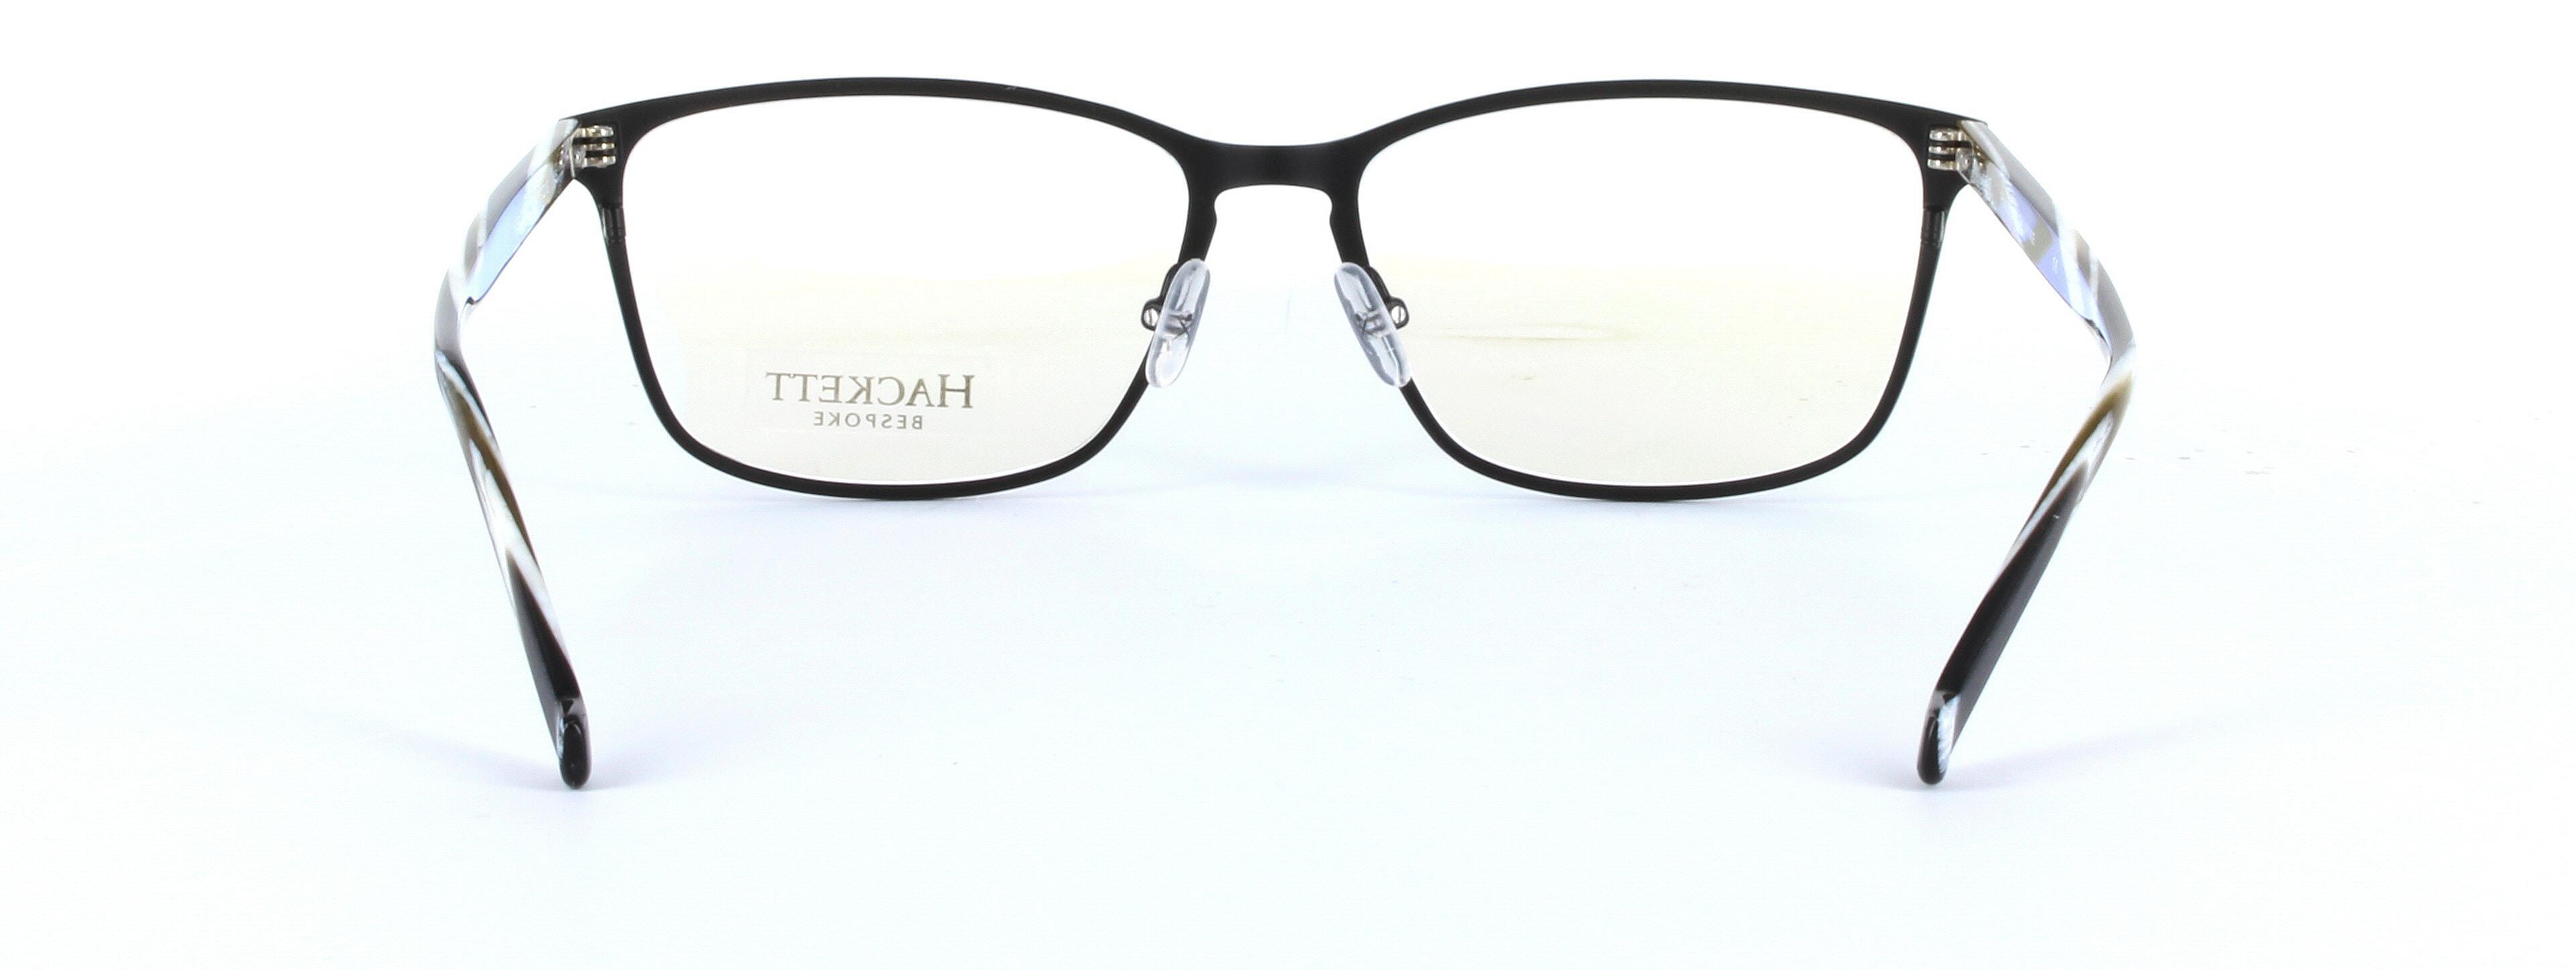 HACKETT BESPOKE (177-02) Black Full Rim Oval Square Metal Glasses - Image View 3